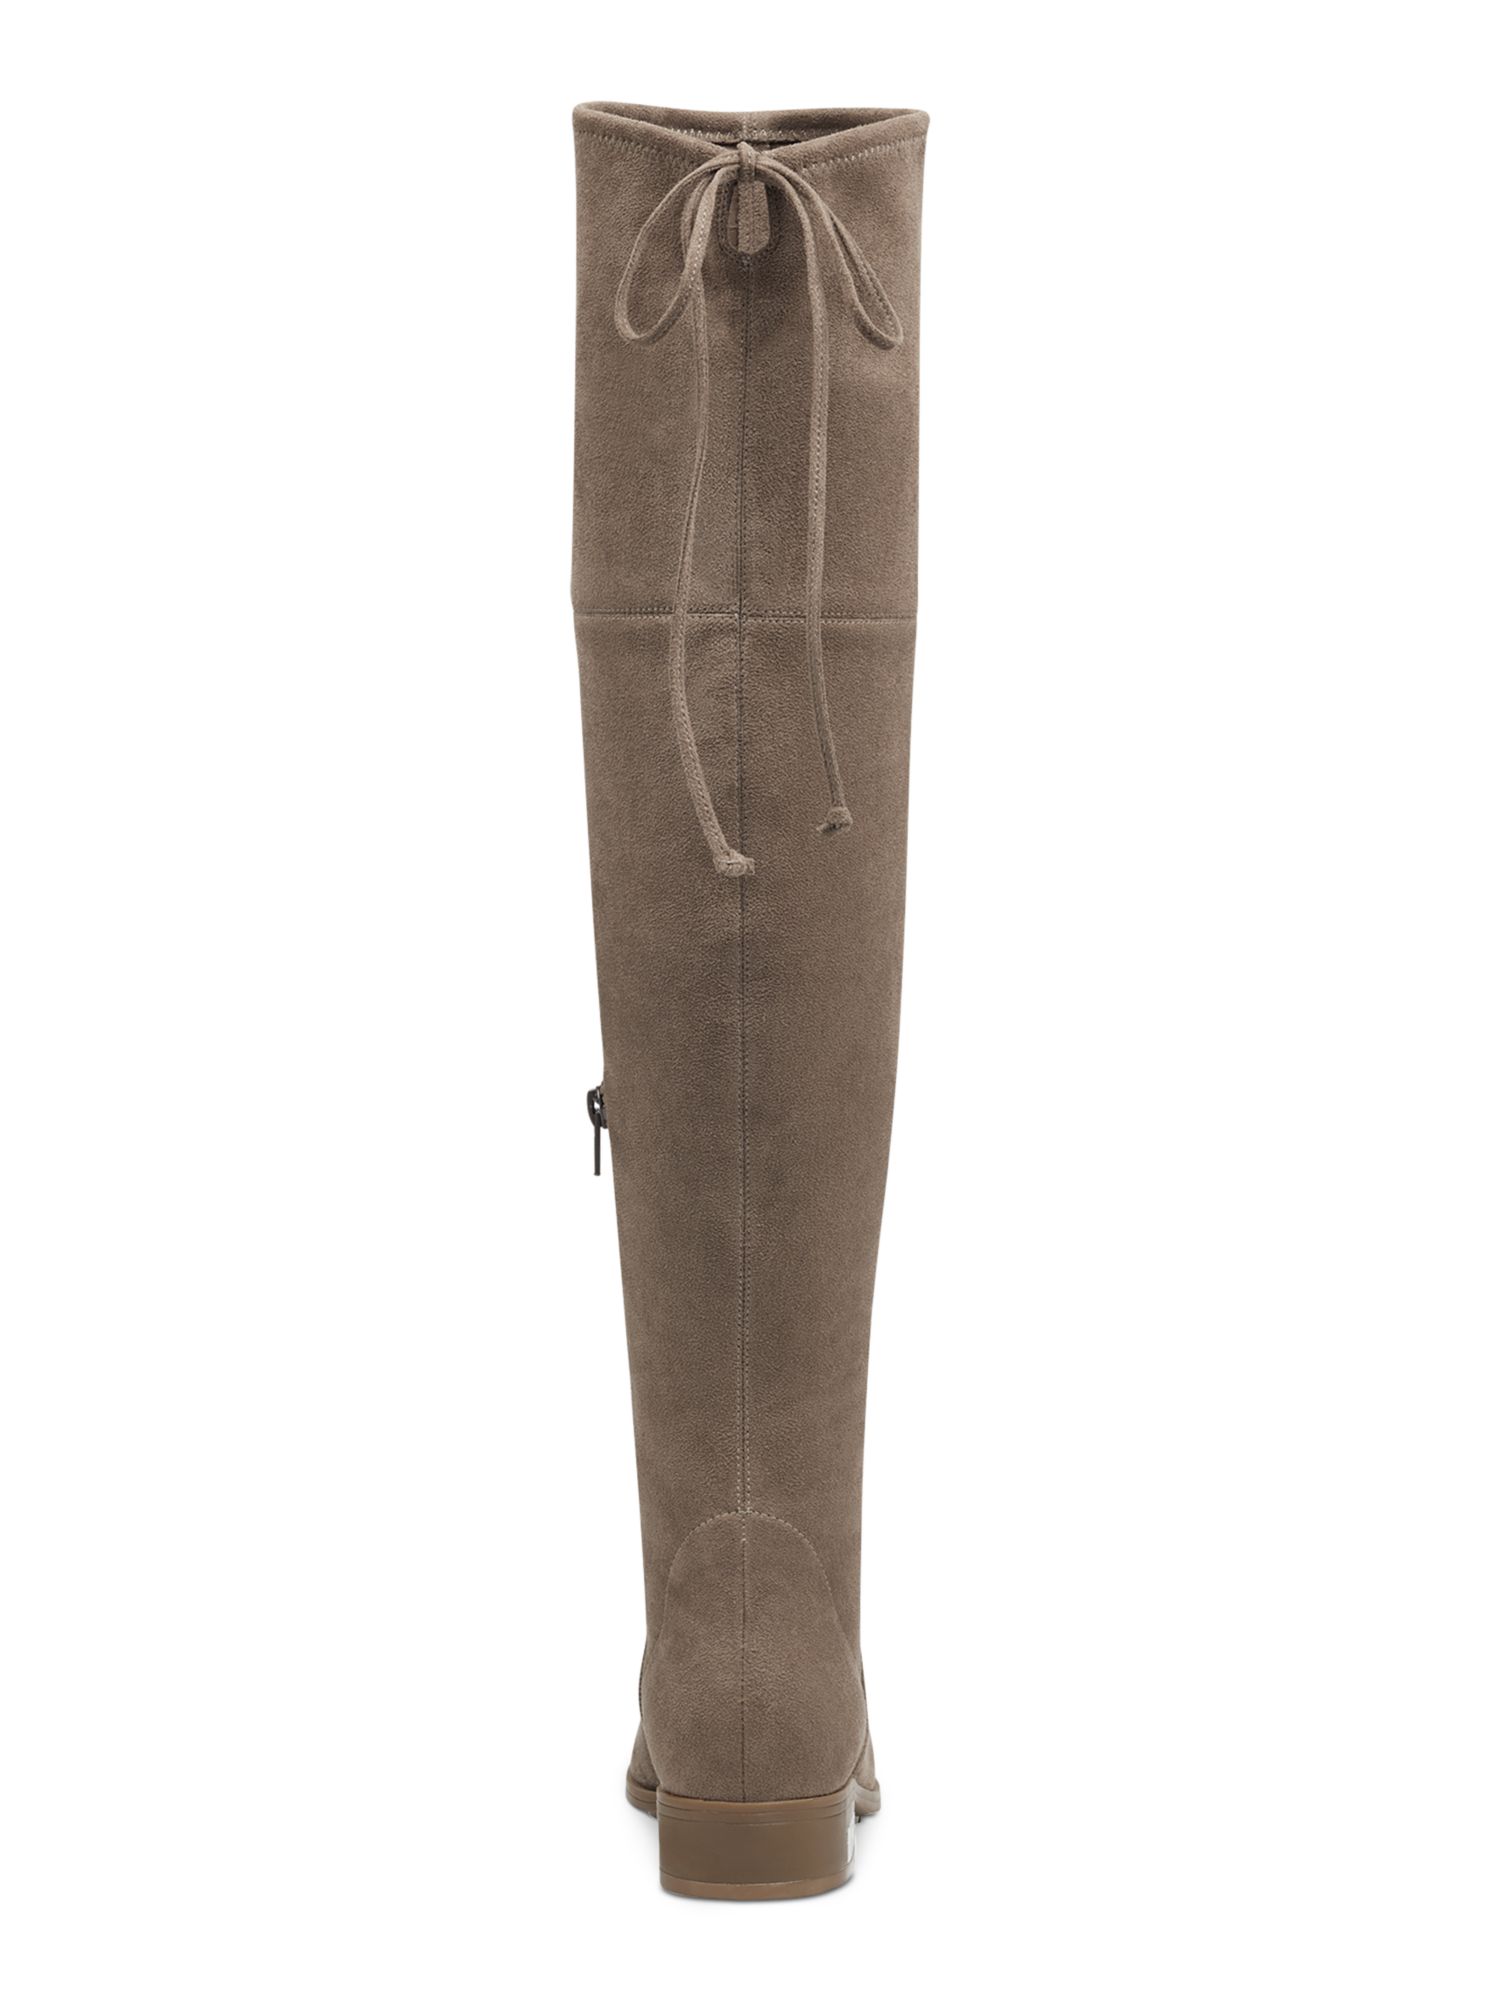 GUESS Womens Brown Zipper Metal Heel Accent Lace Padded Zafira Almond Toe Block Heel Boots 6 M